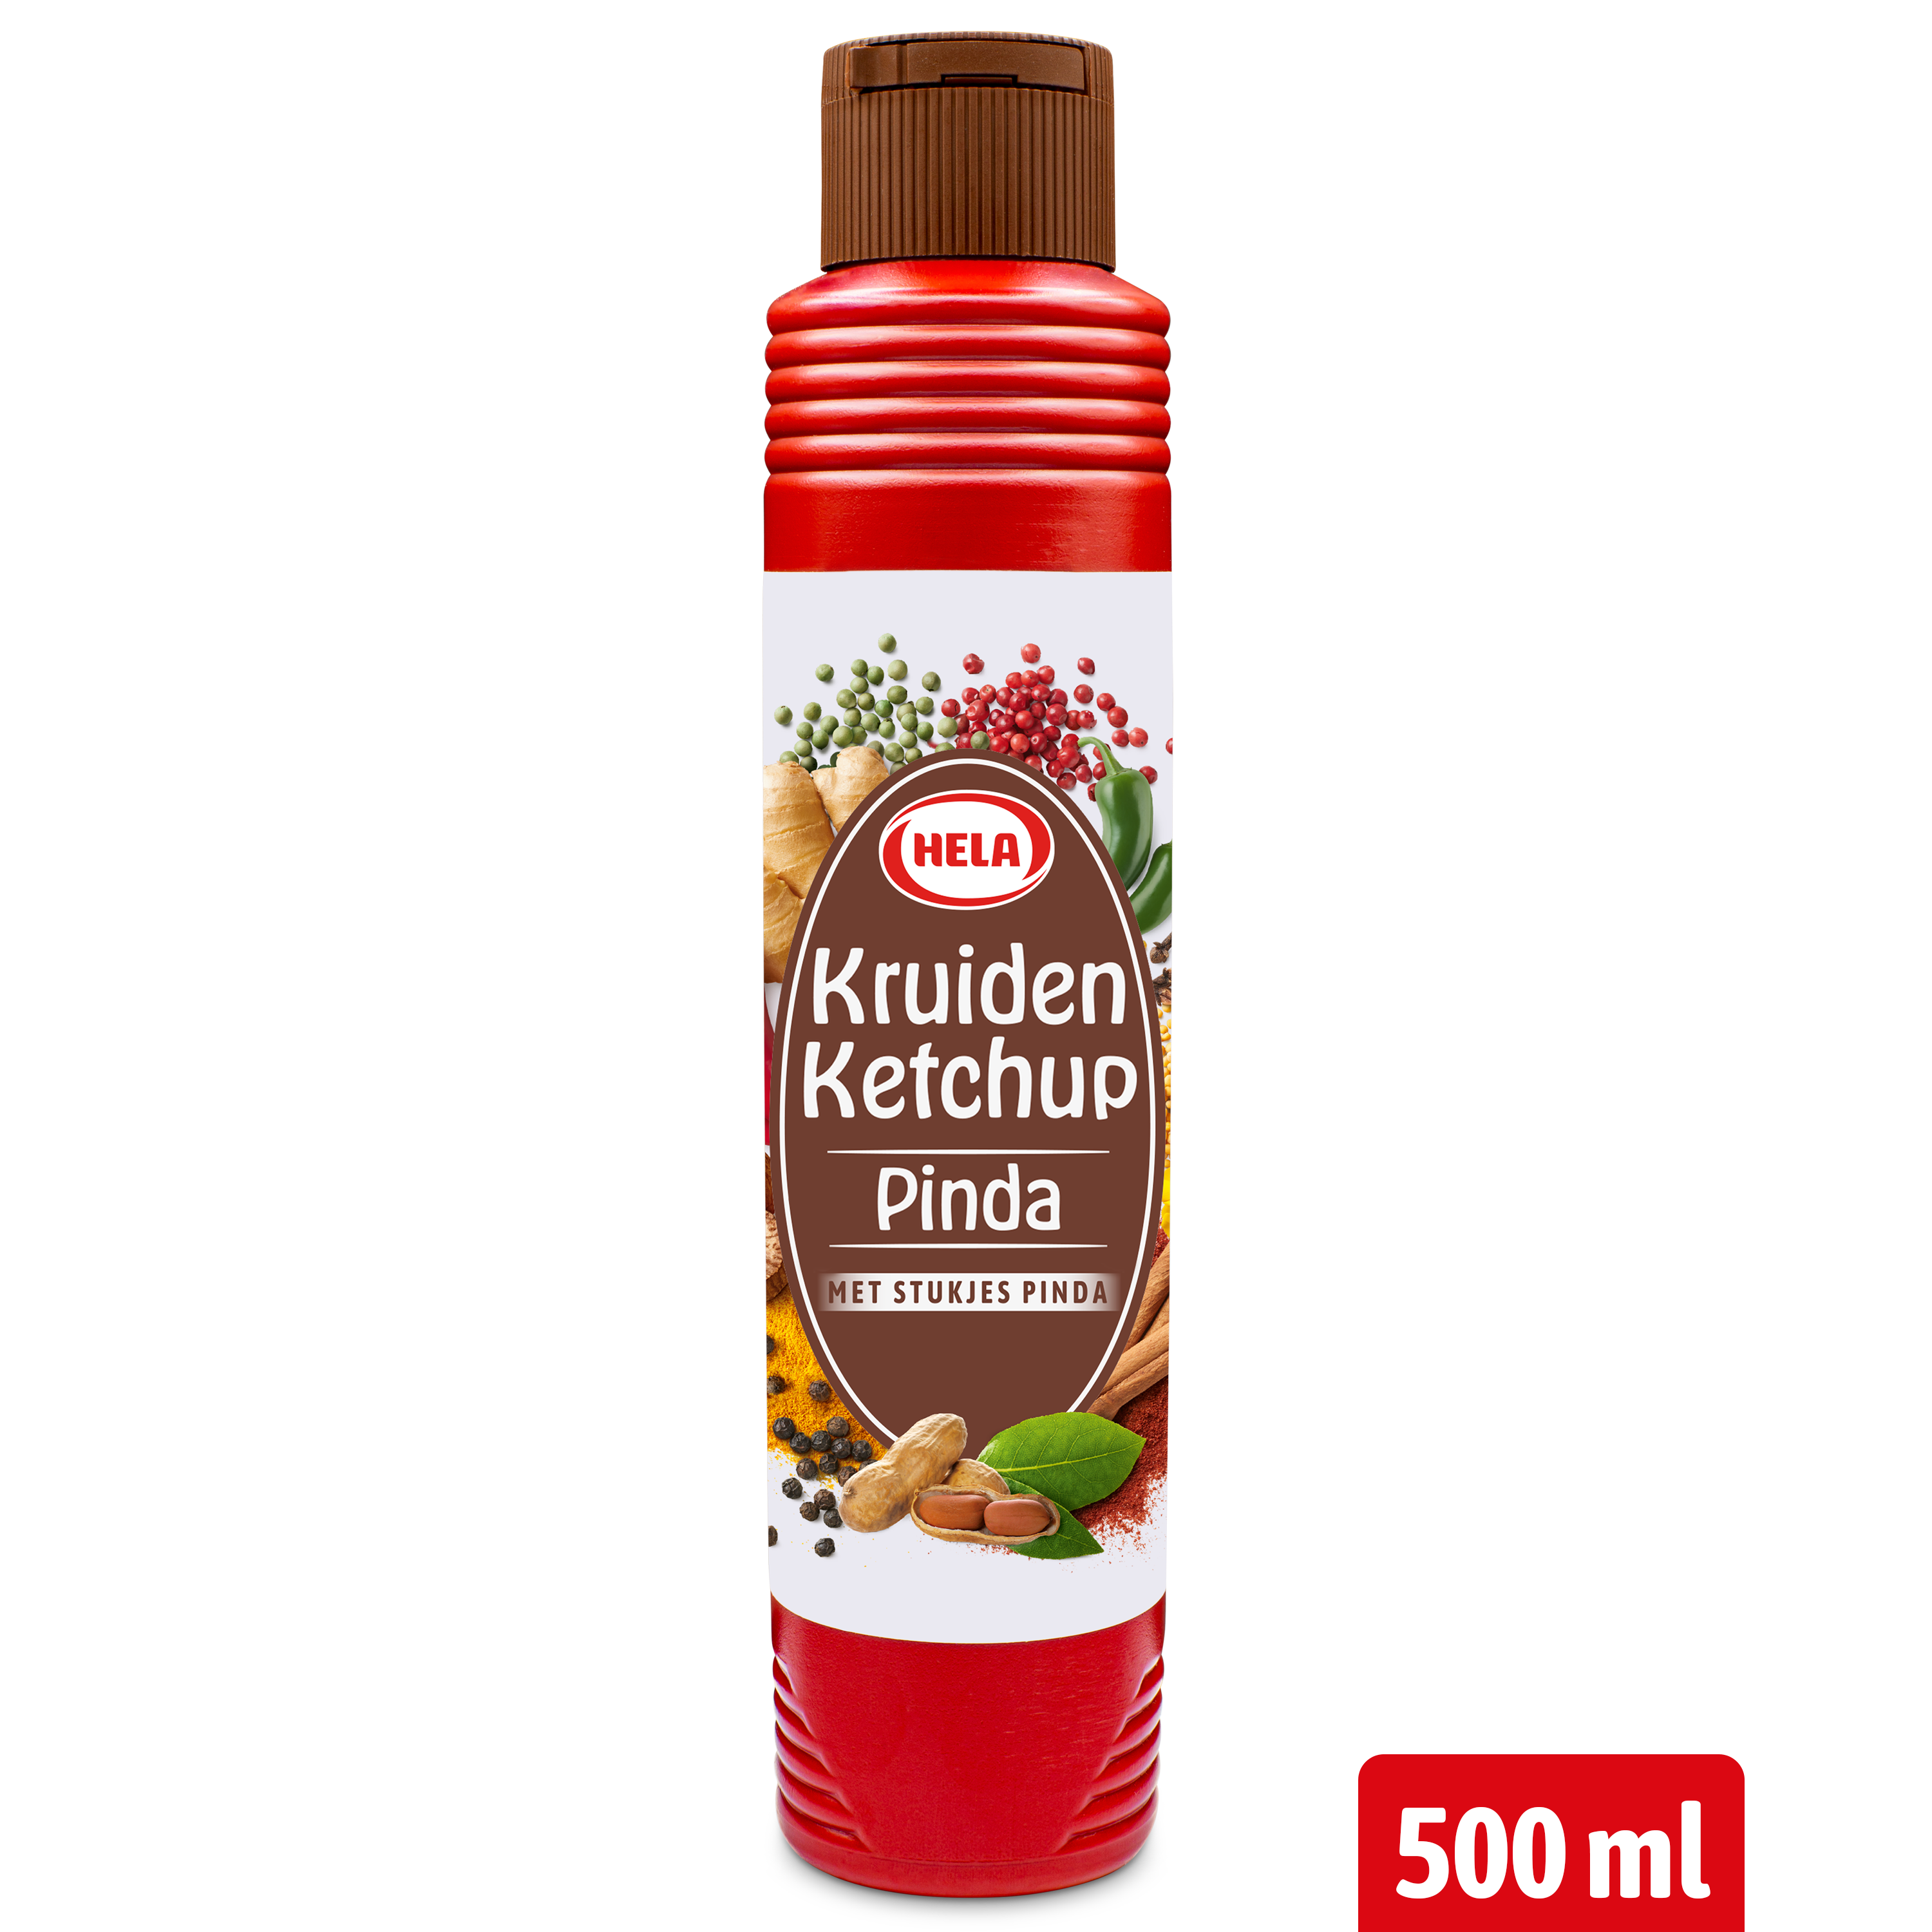 hela-kruiden-ketchup-pinda-6×500-ml.png